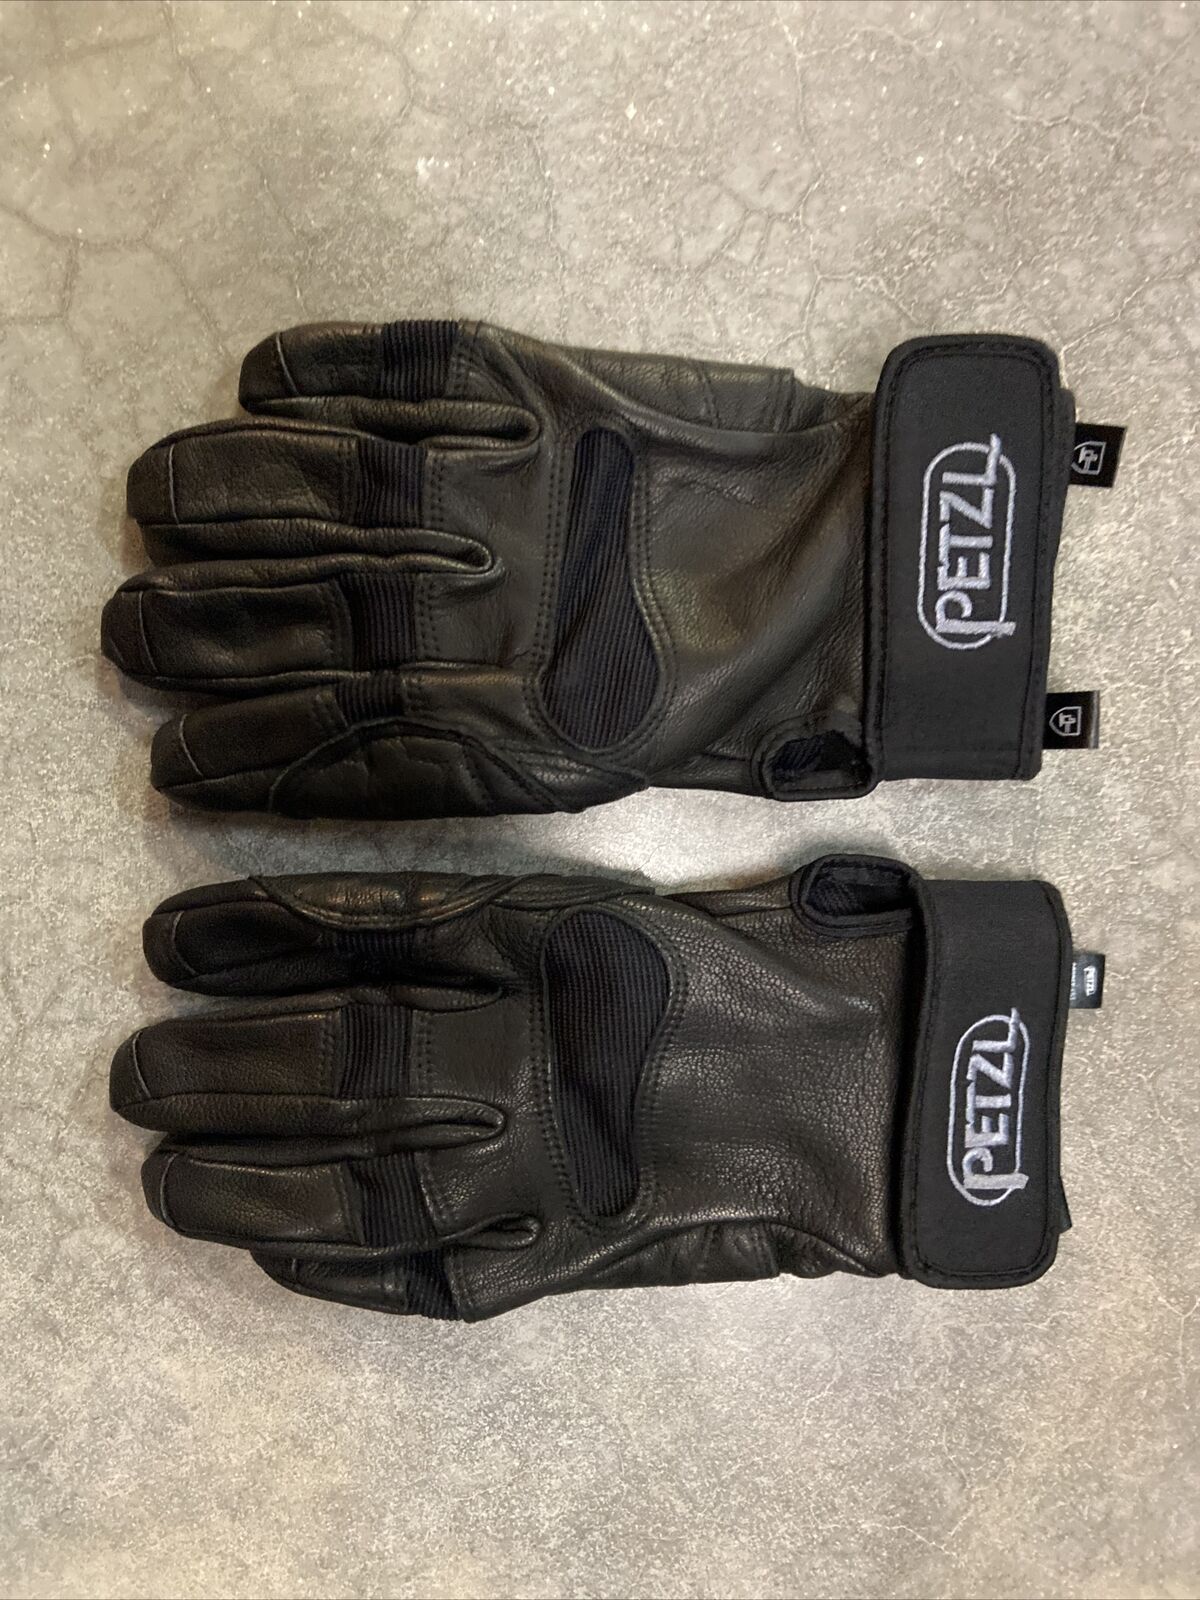 Petzl Cordex Plus Gloves Black Large L